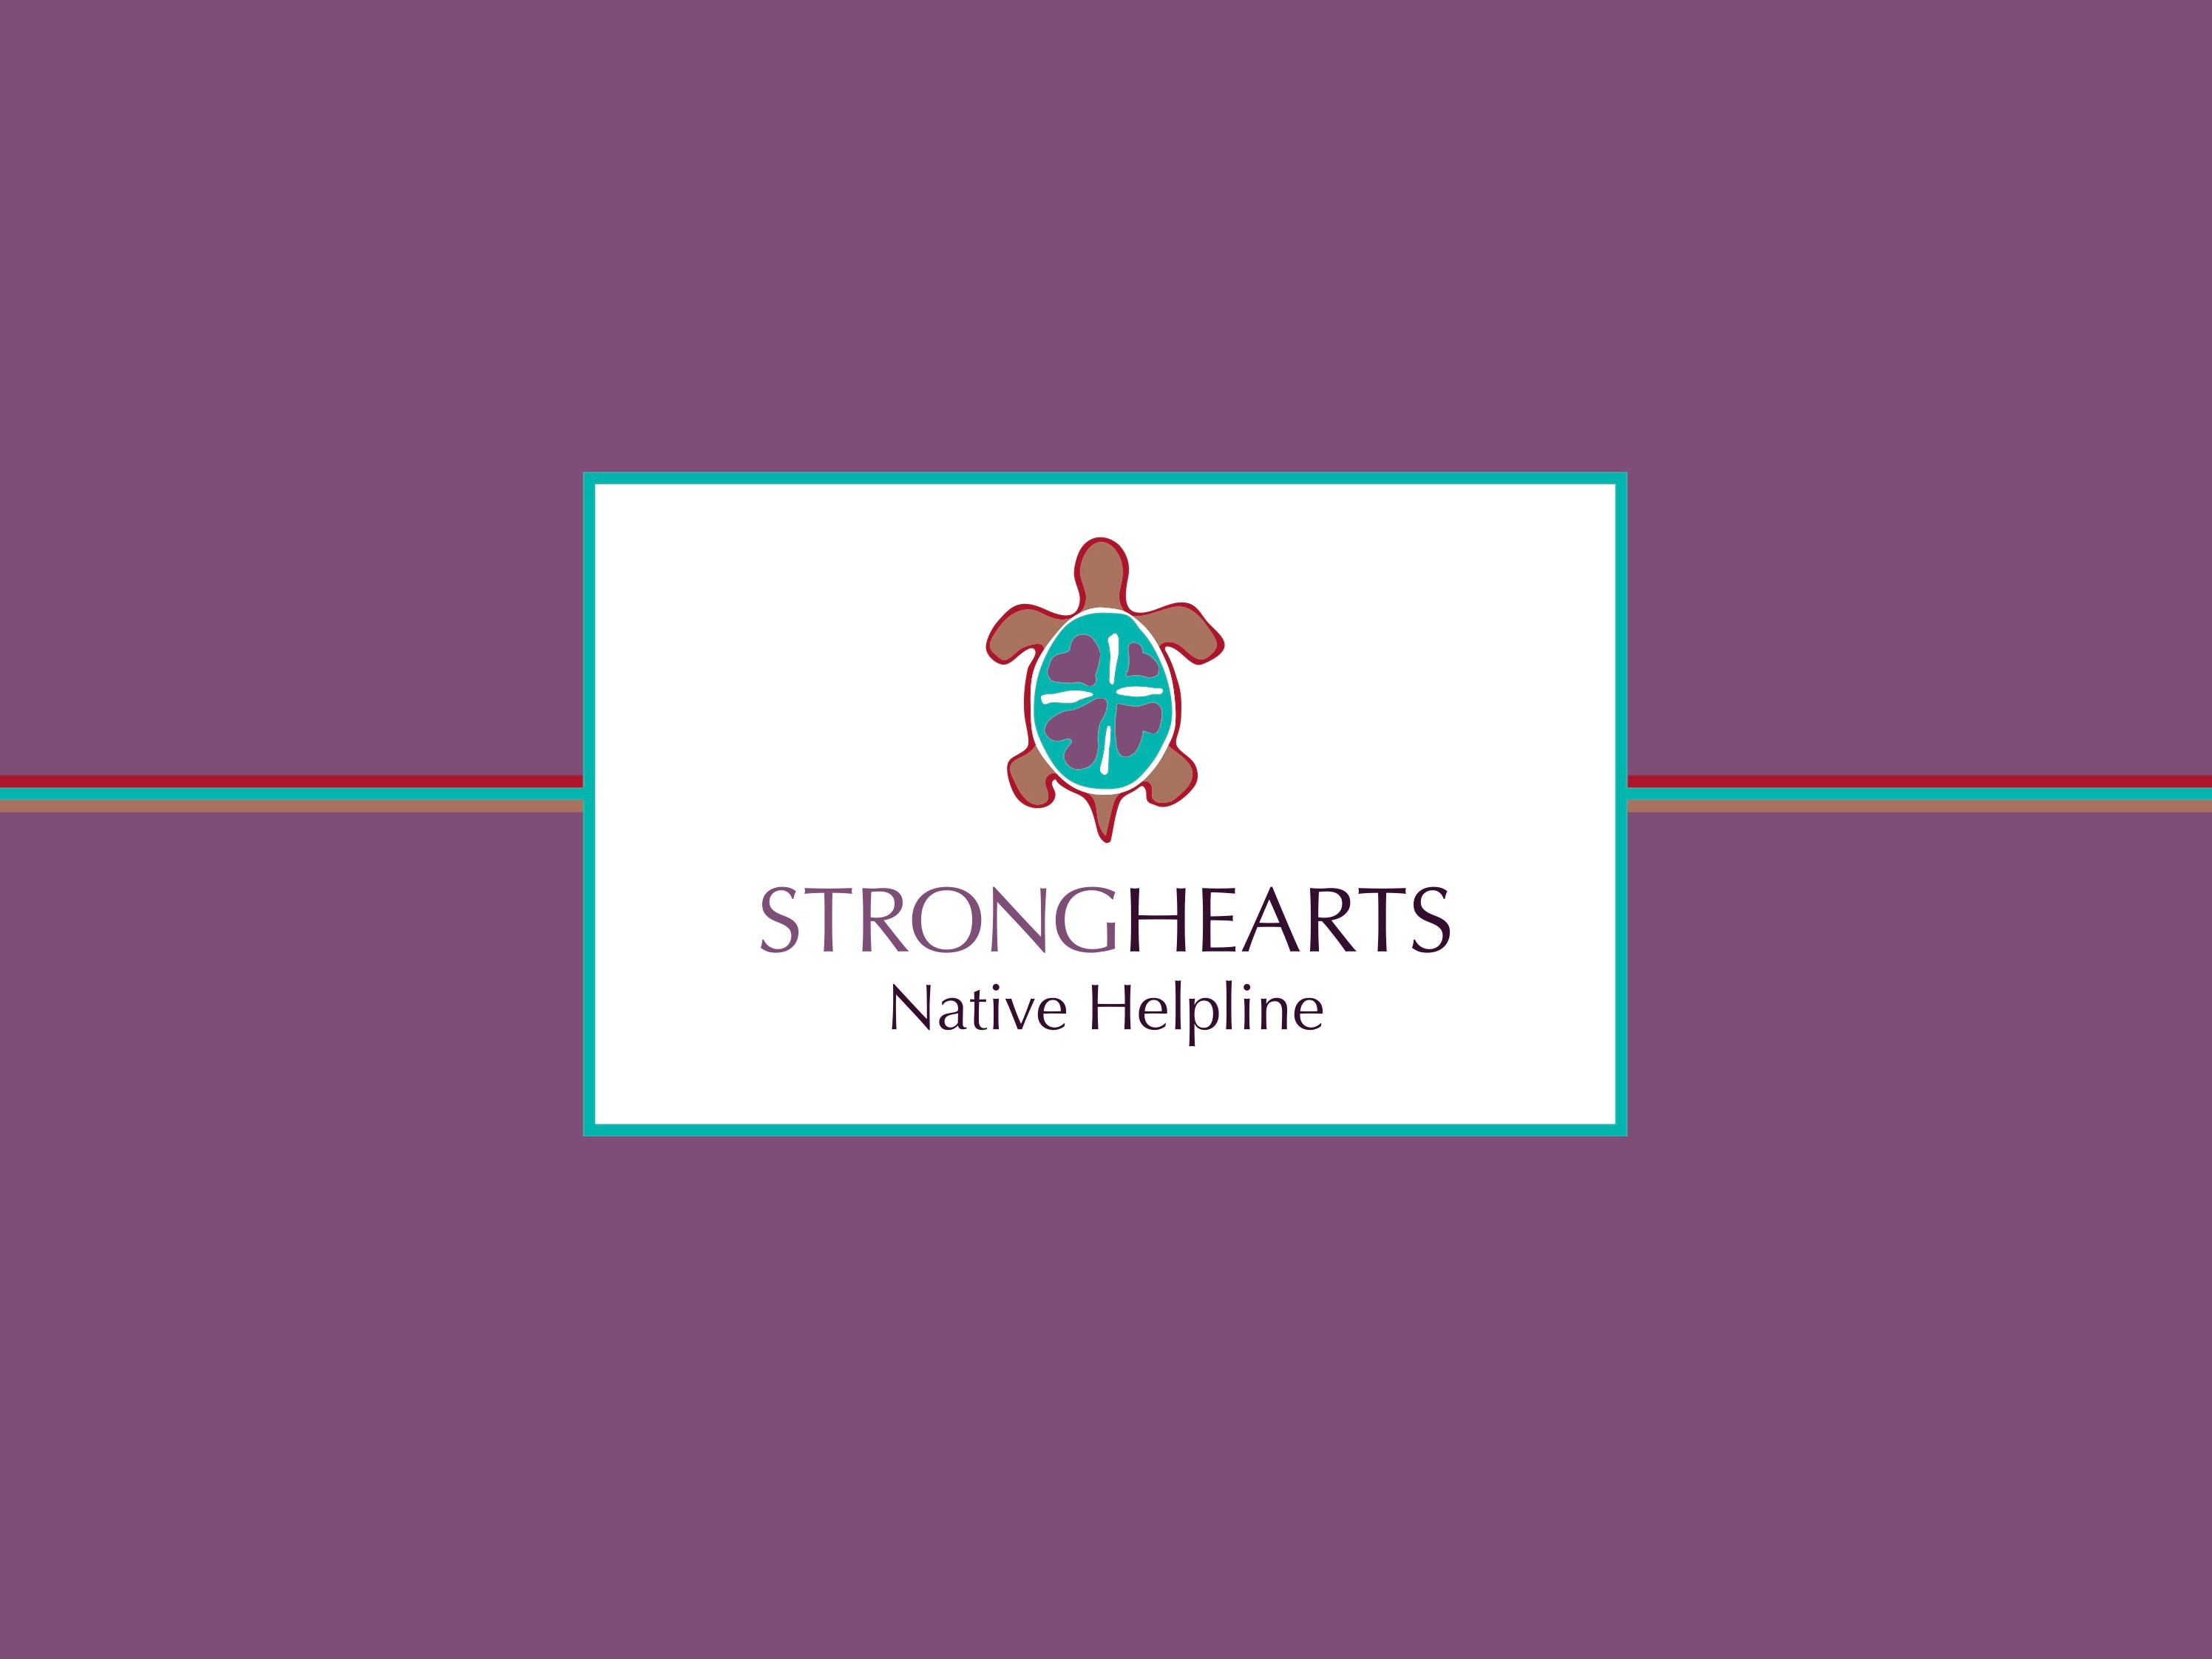 Strong Hearts Native hotline logo